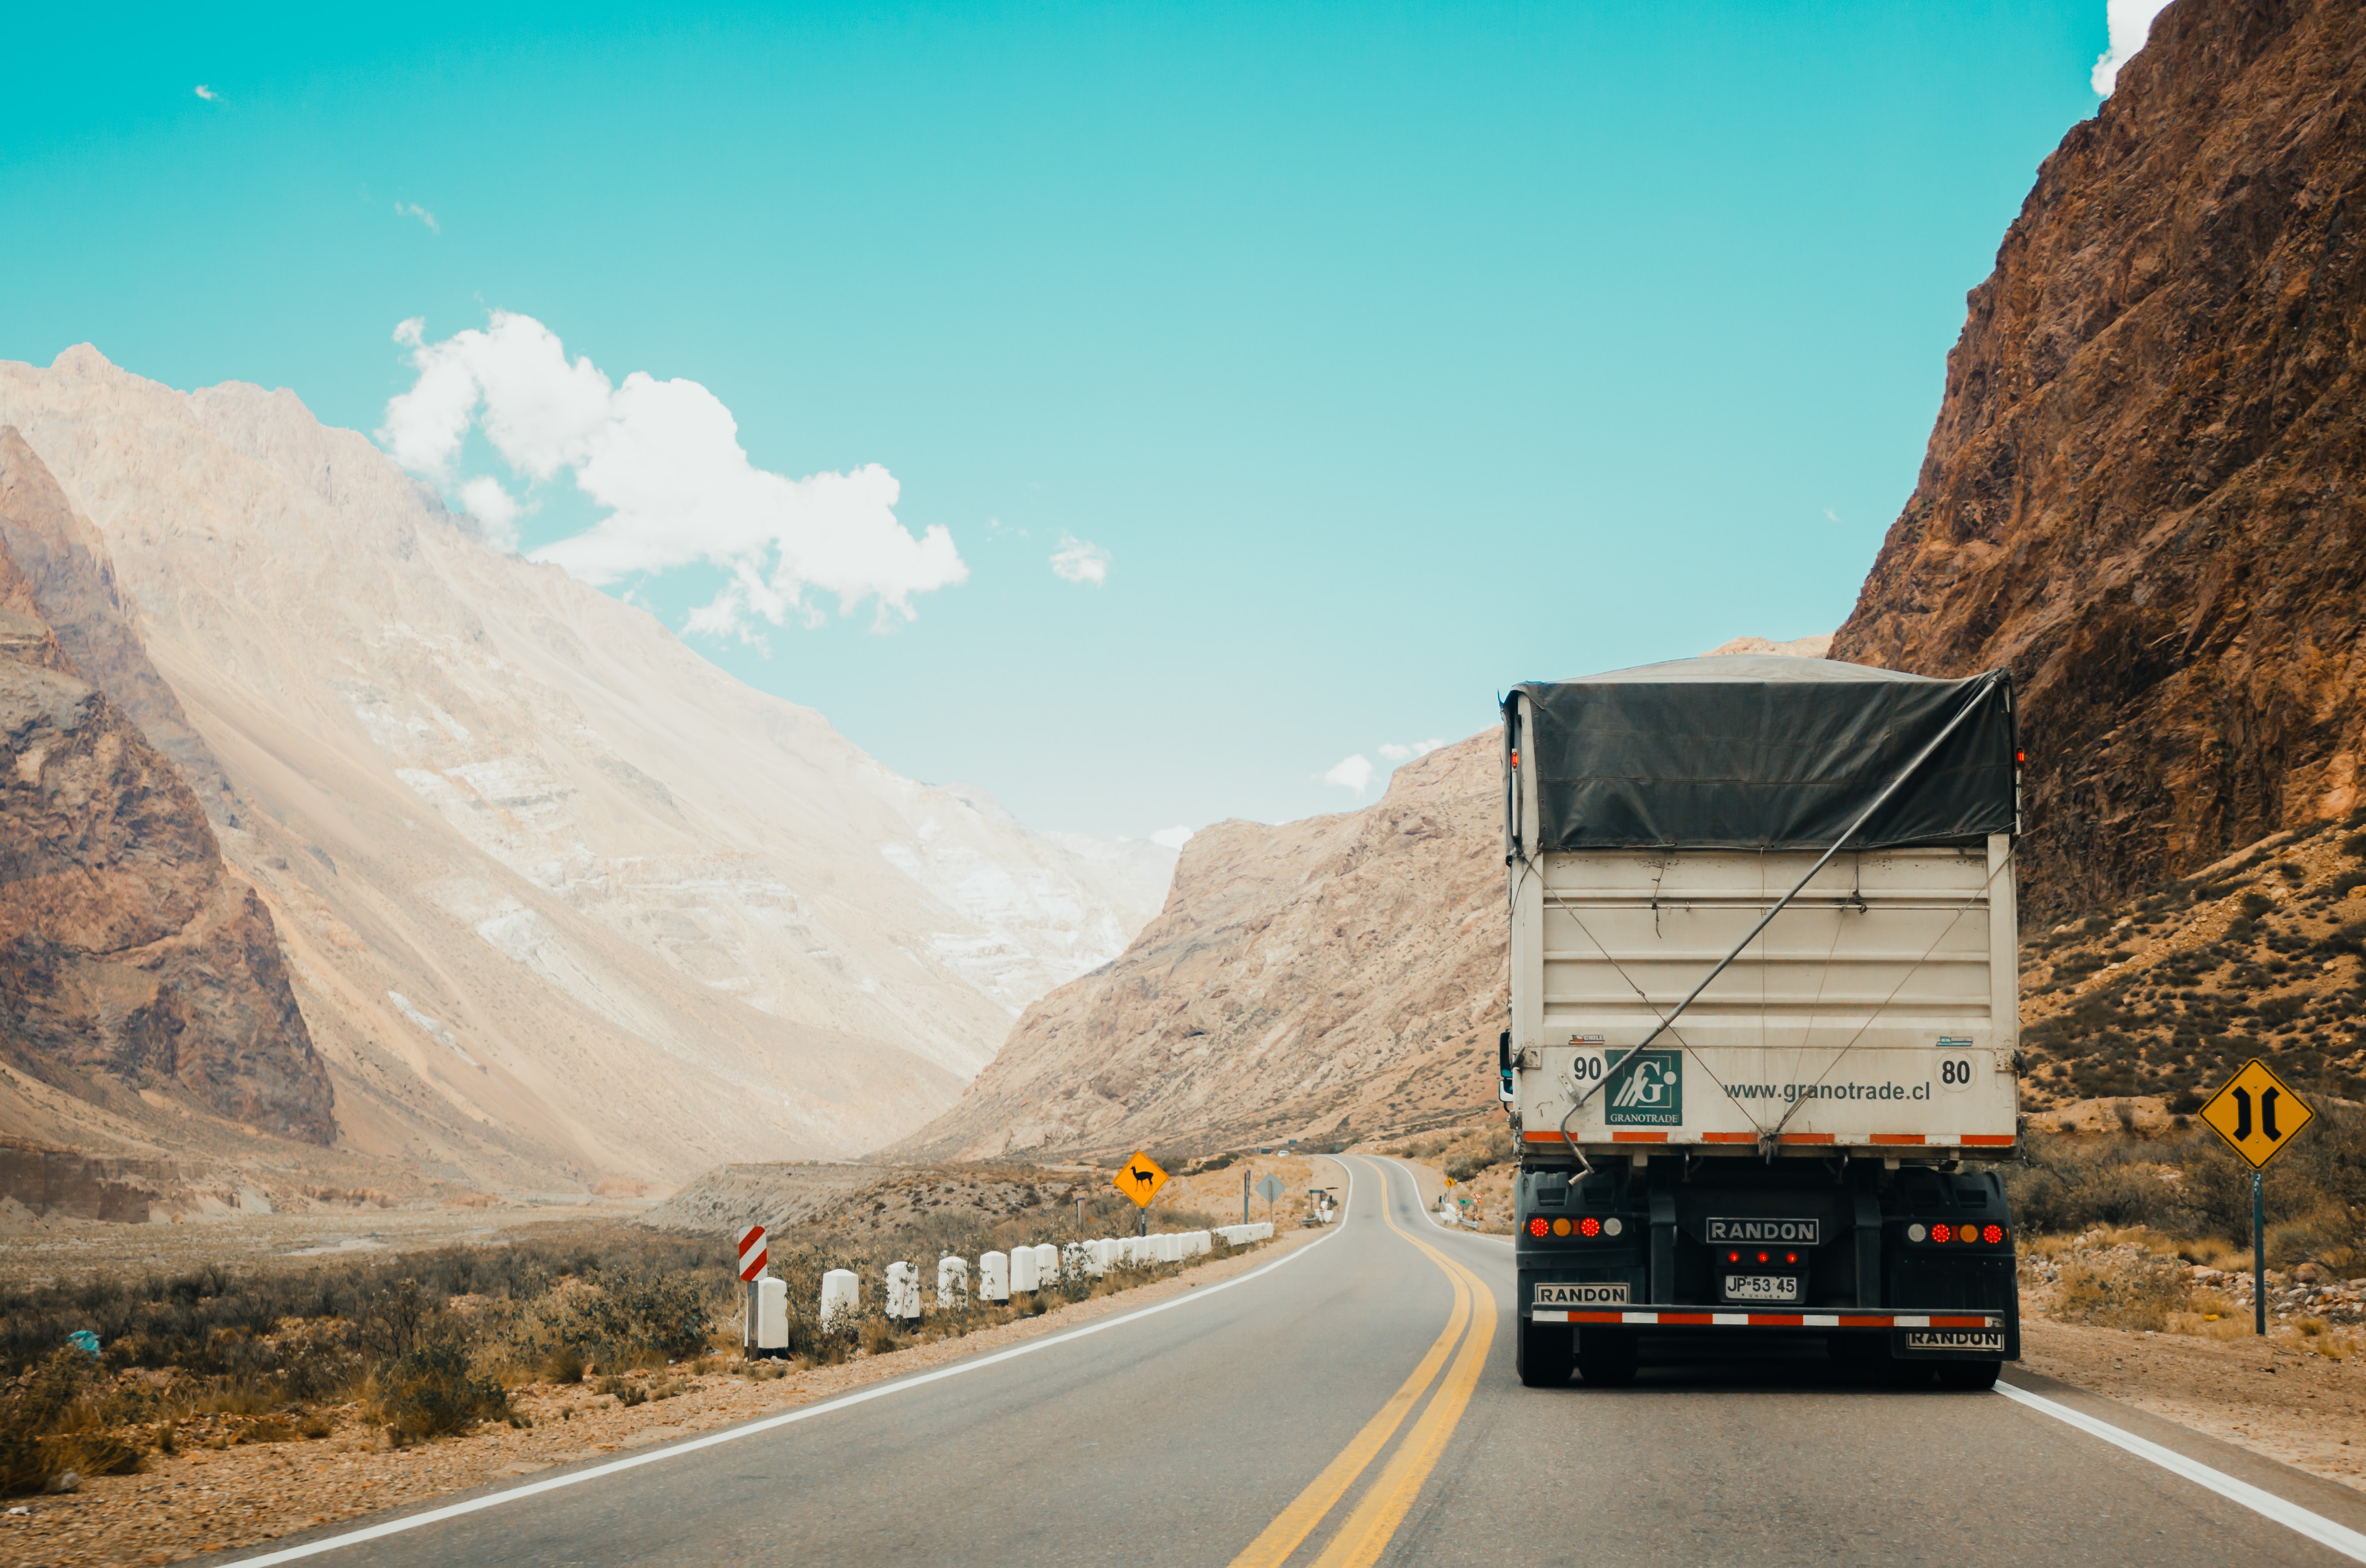 Dump truck on the road in the mountains; image by Rodrigo Abreu, via Unsplash.com.